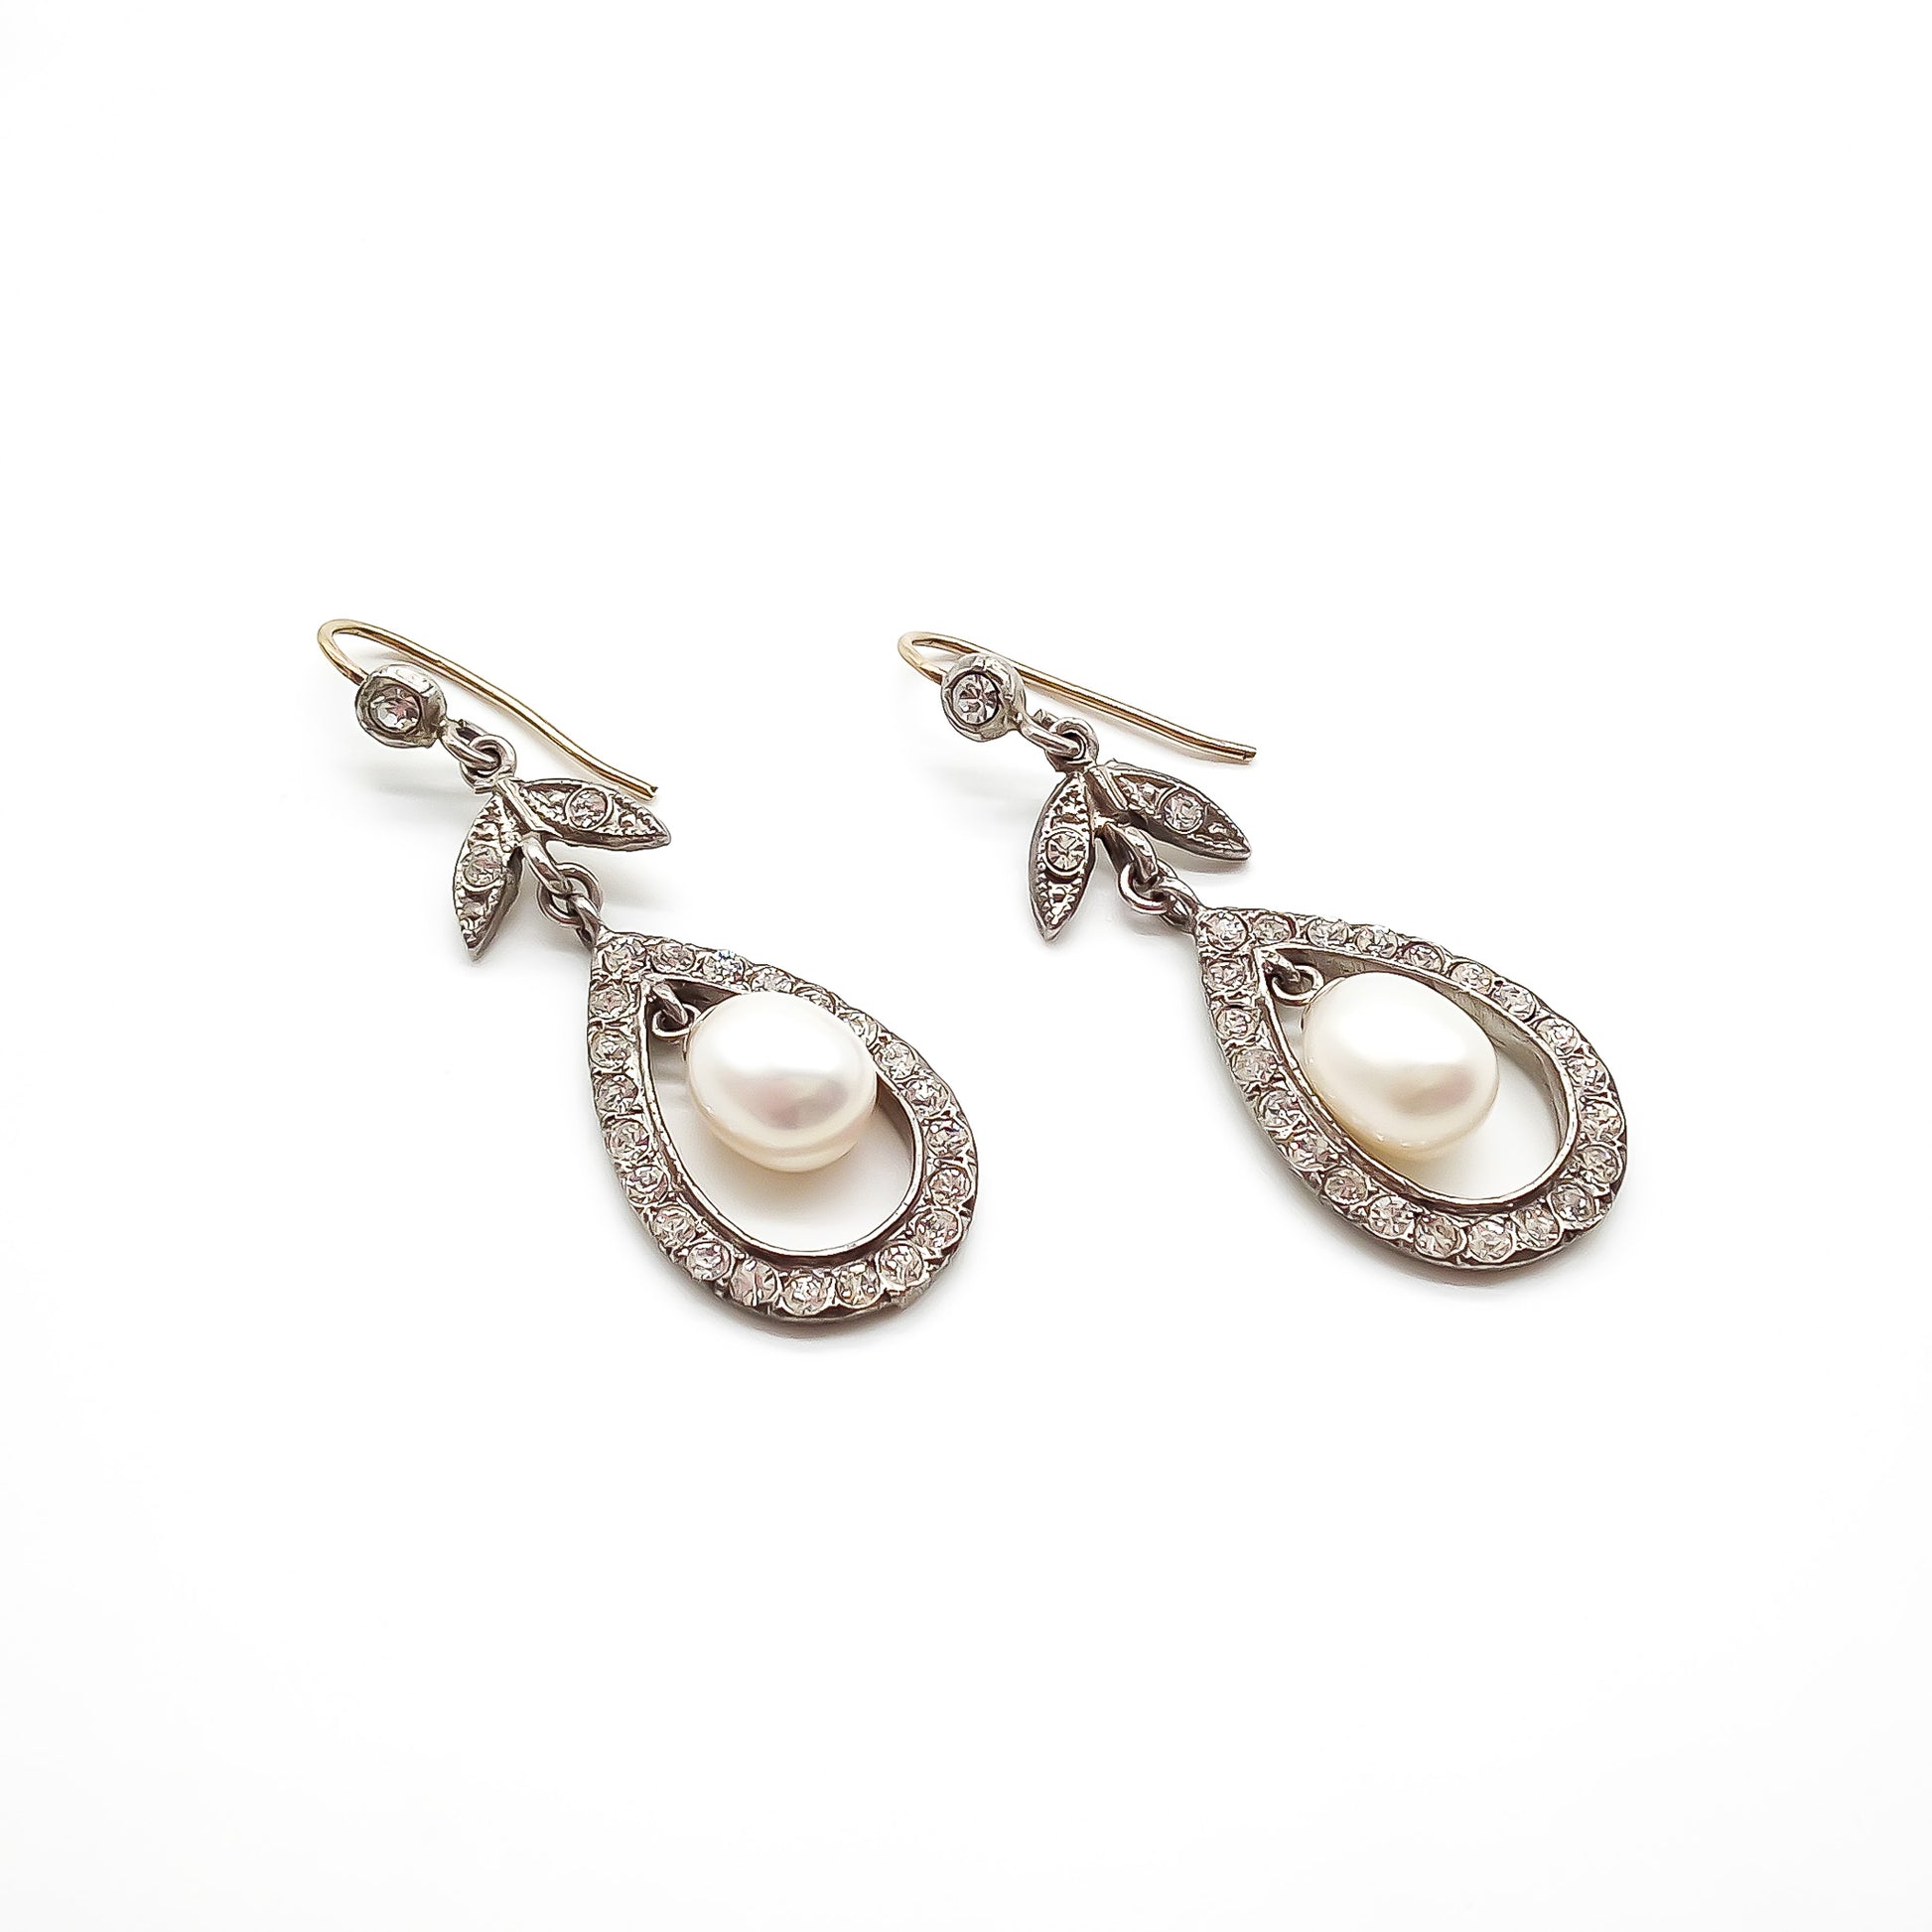 Glamorous vintage sterling silver chandelier paste earrings with dangling pearl drops.